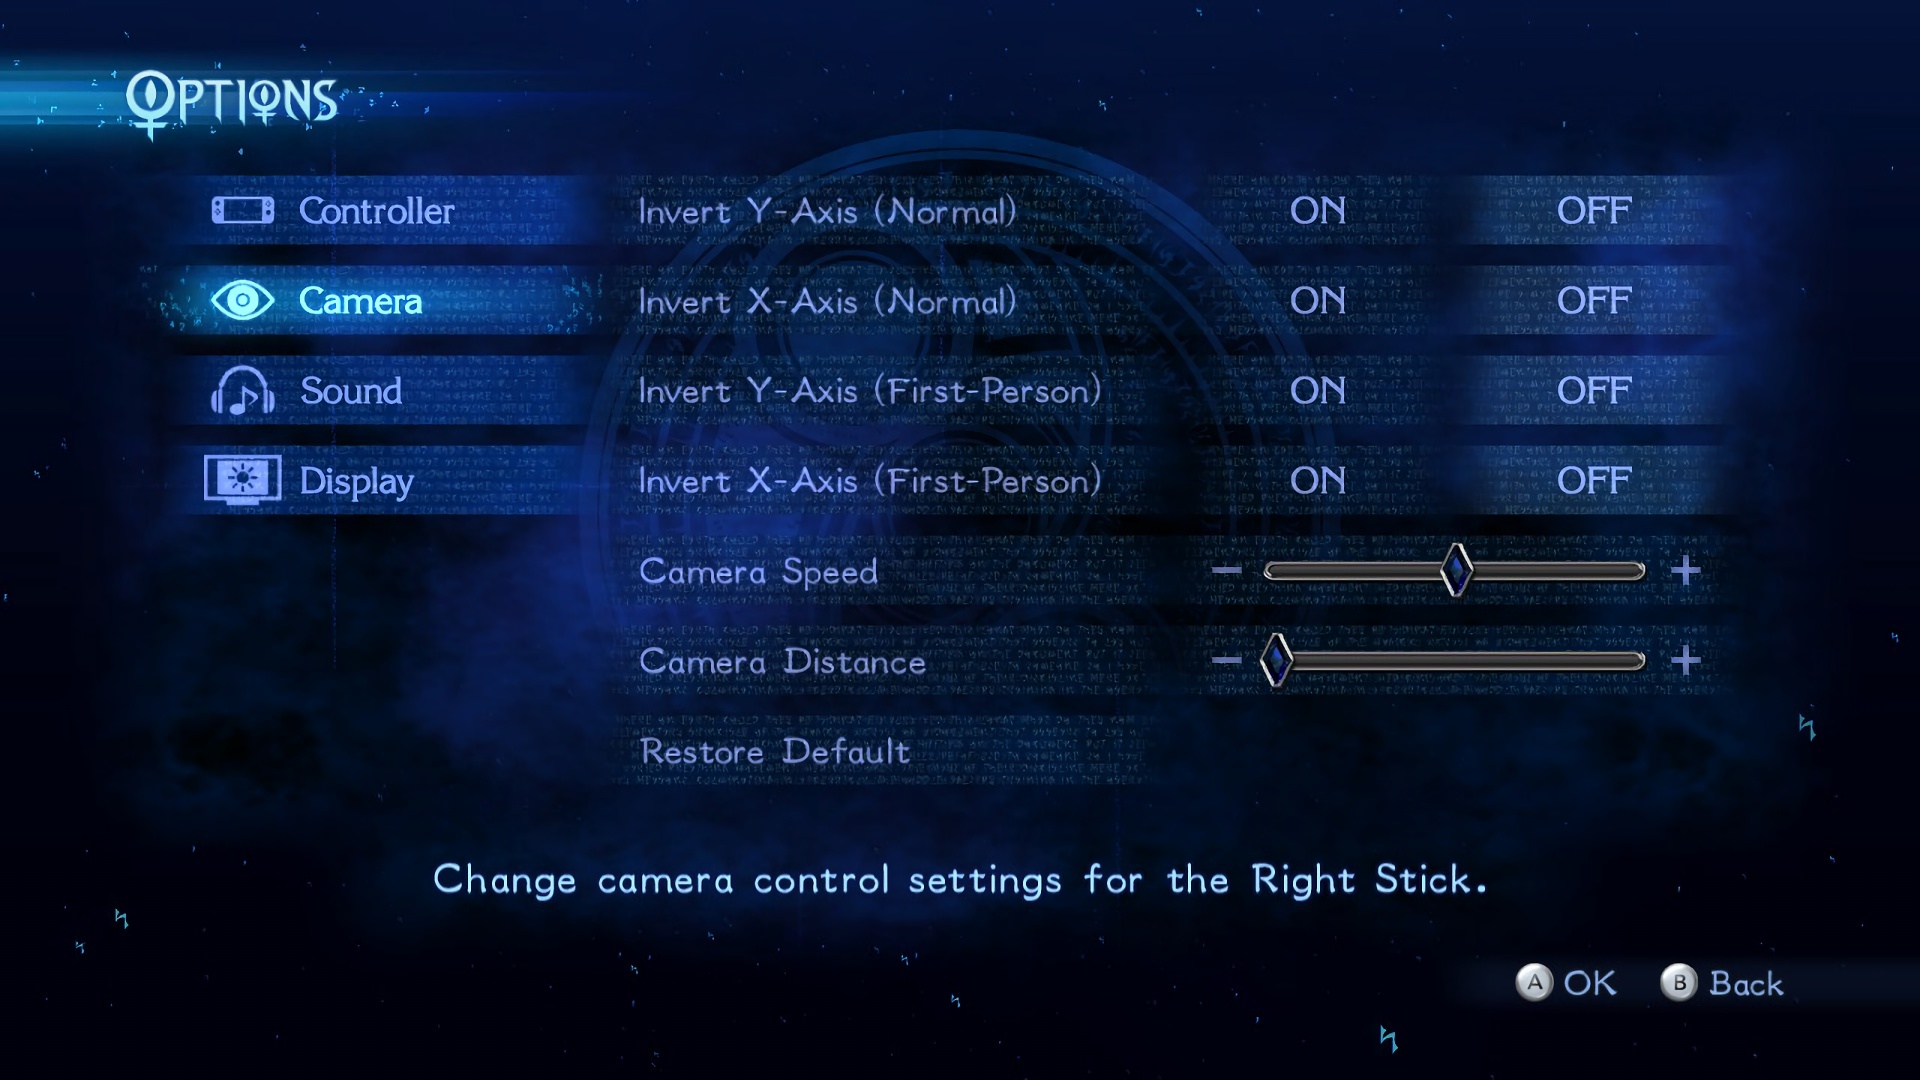 Bayonetta 2 on Steam Deck with CEMU Emulator - best settings